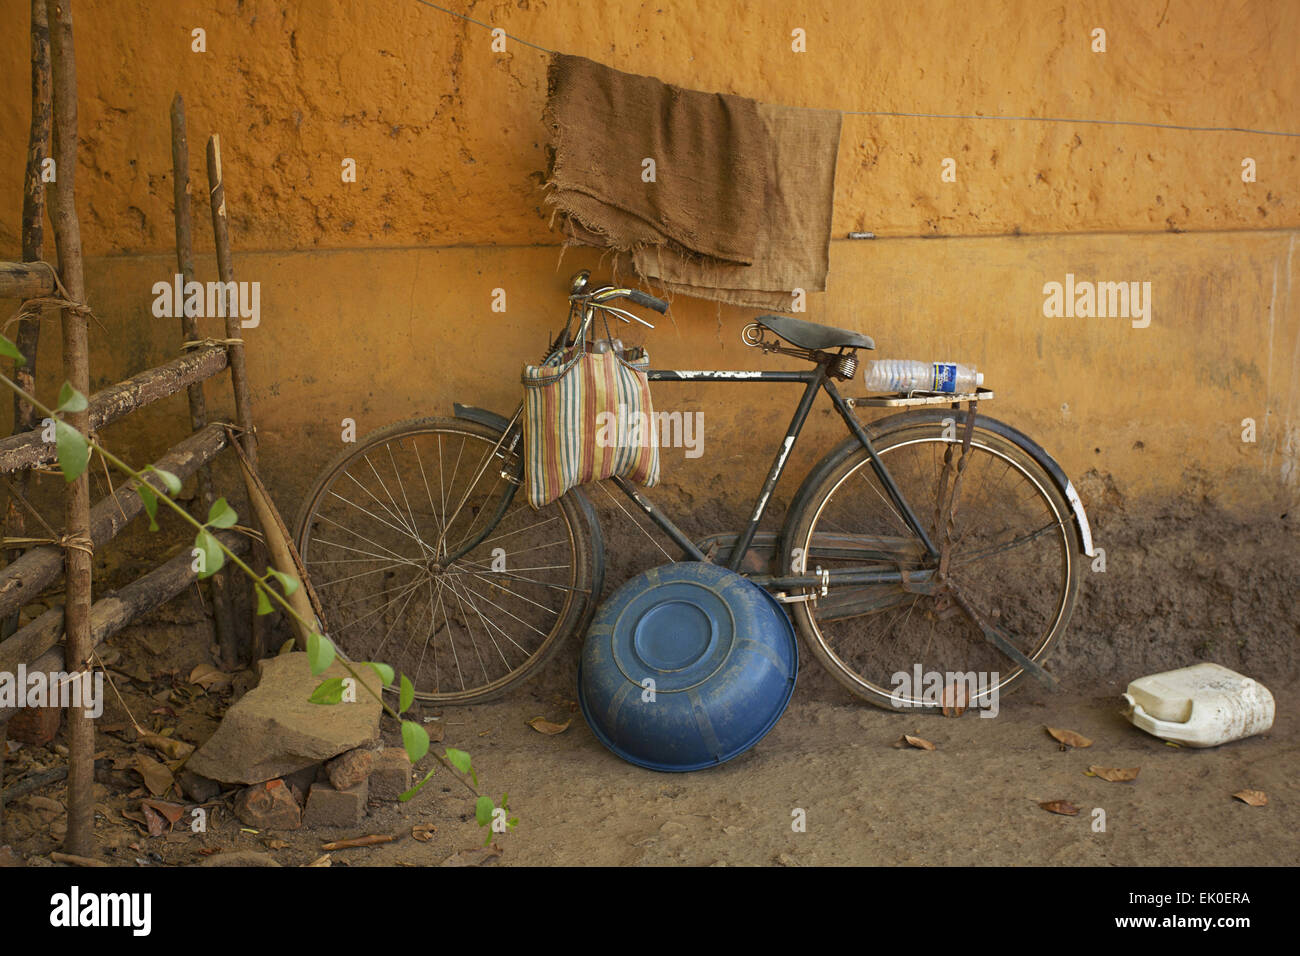 Fahrrad rock kunst -Fotos und -Bildmaterial in hoher Auflösung – Alamy